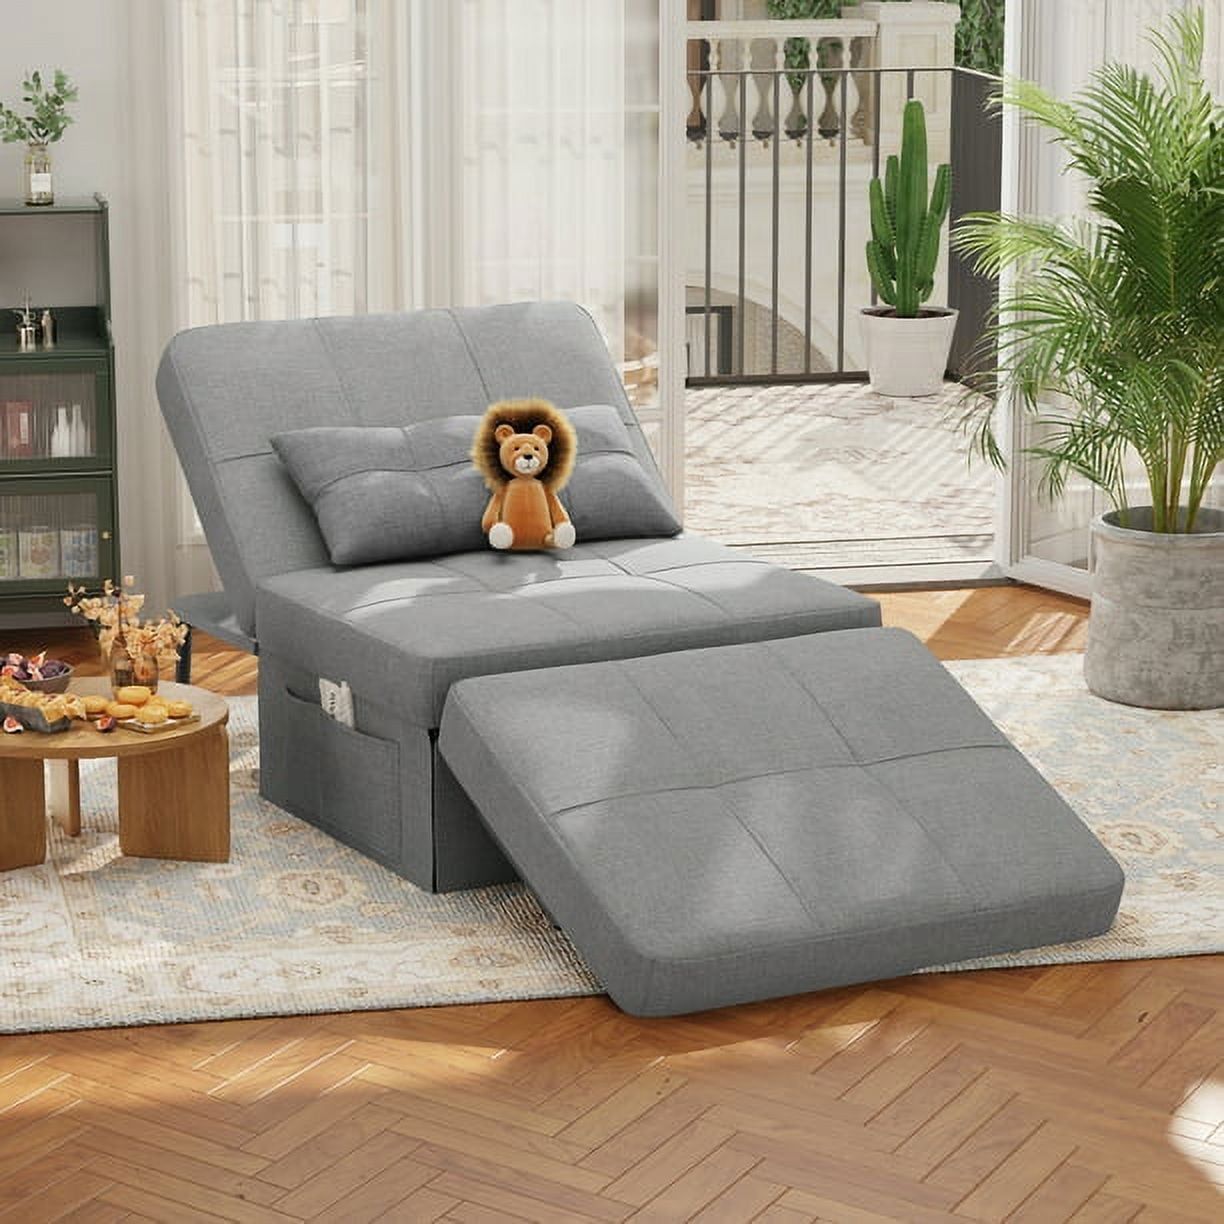 Chair Bed, Lofka Convertible Recliner Single Sofa Bed, Free Installation,  730 Lbs, Light Gray – Walmart Inside 8 Seat Convertible Sofas (Photo 12 of 15)